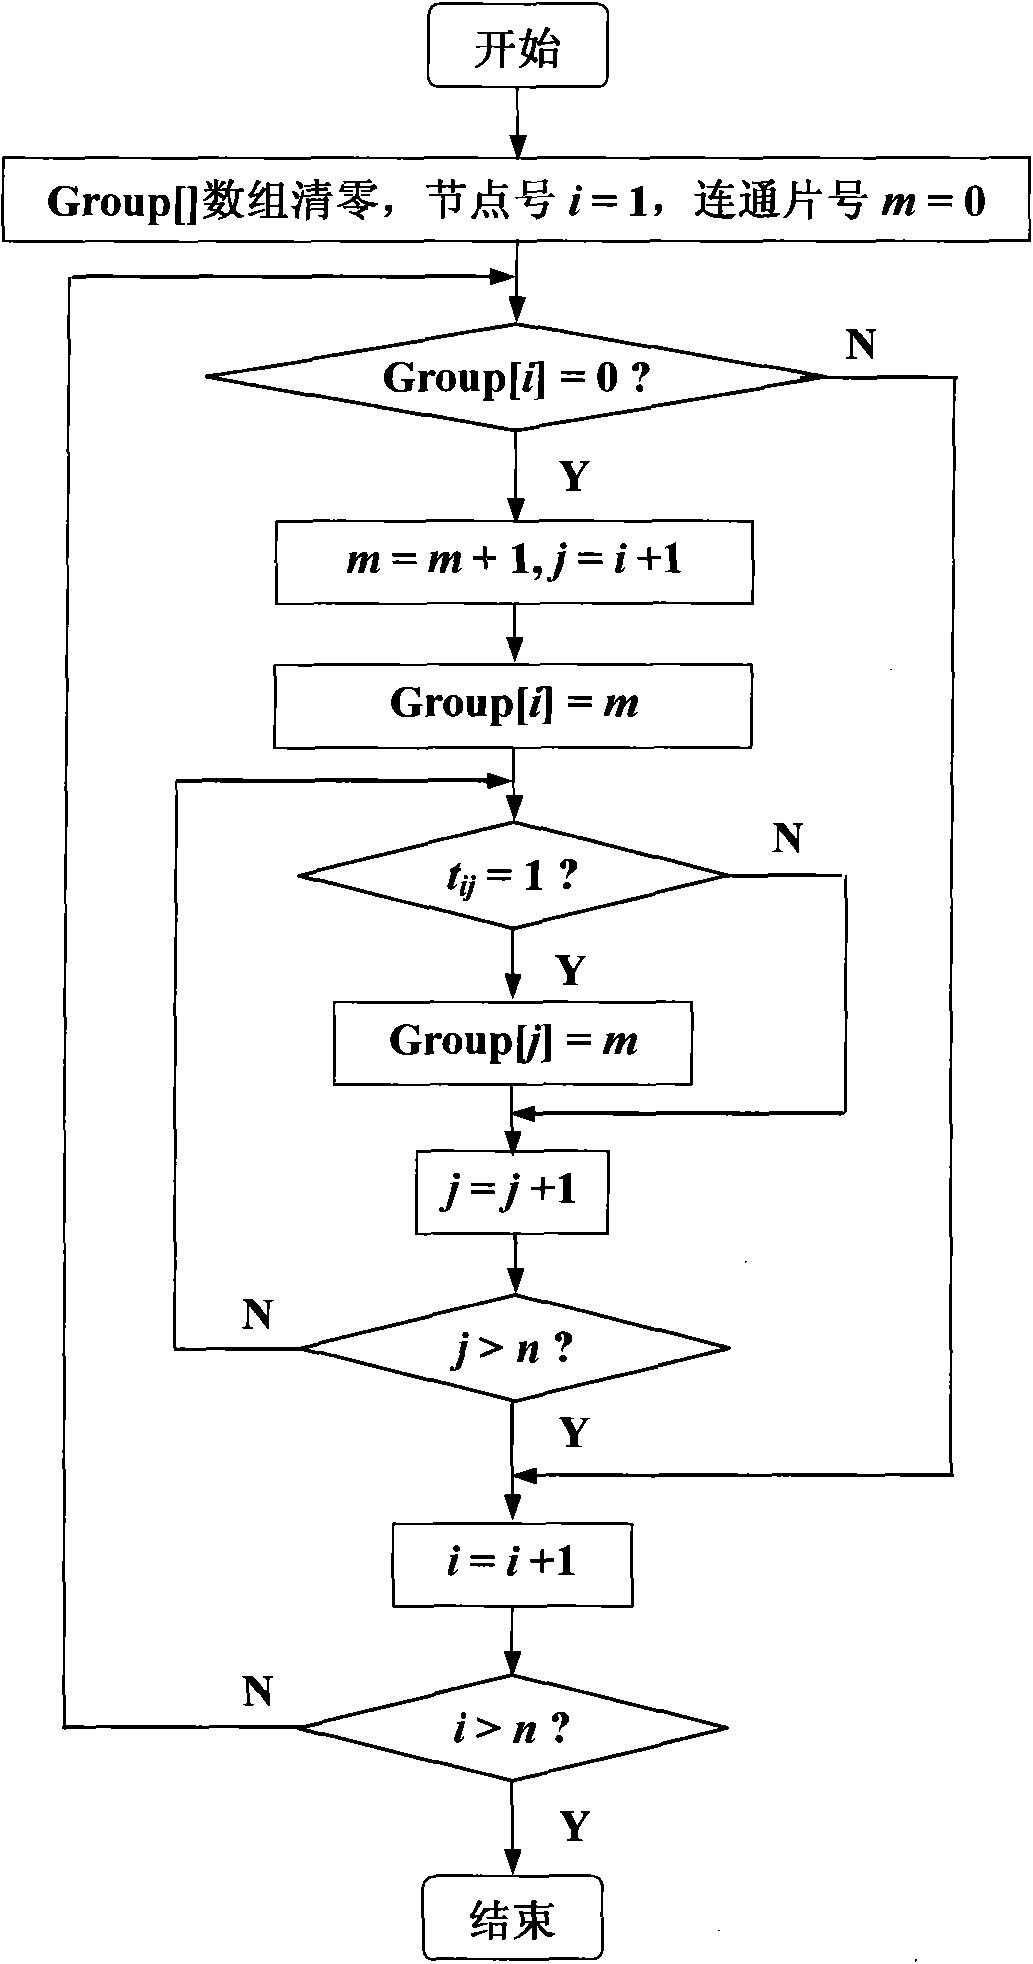 Matrix analysis method of power system network topology